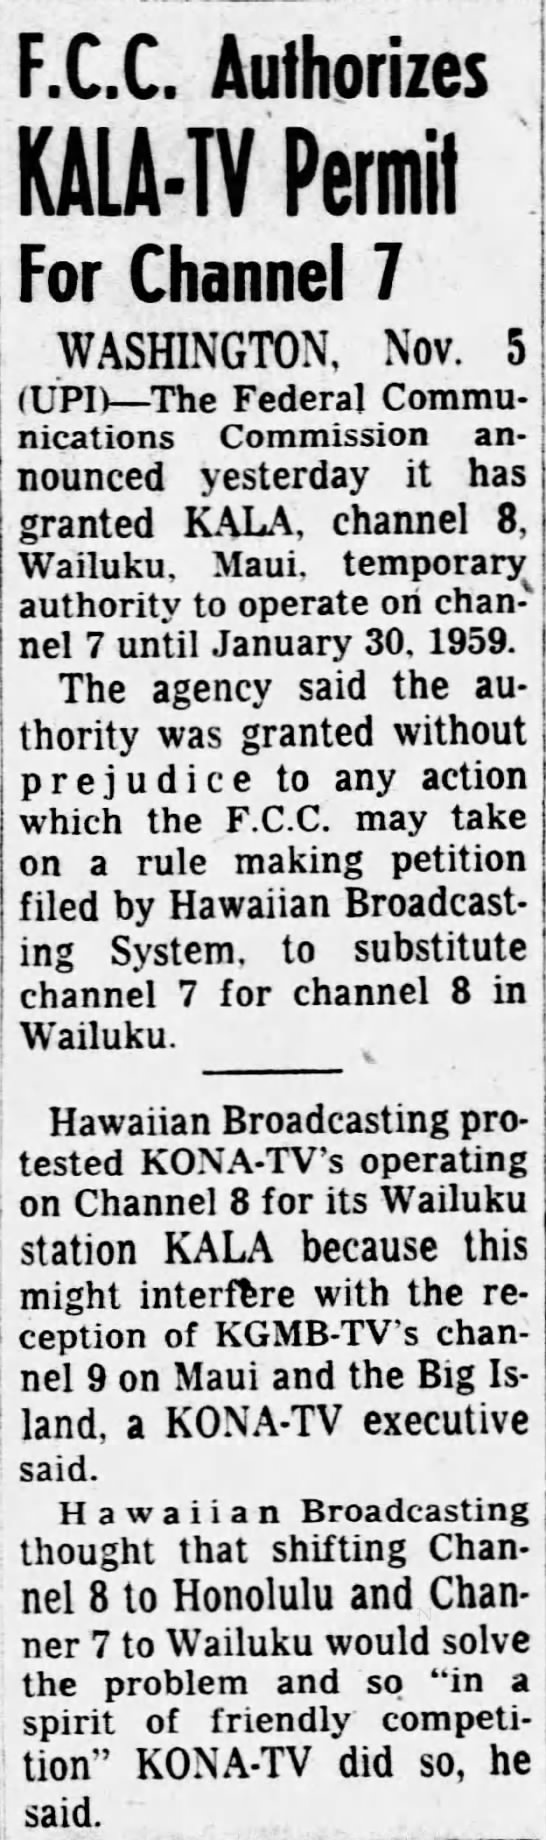 F.C.C. Authorizes KALA-TV Permit For Channel 7 - 